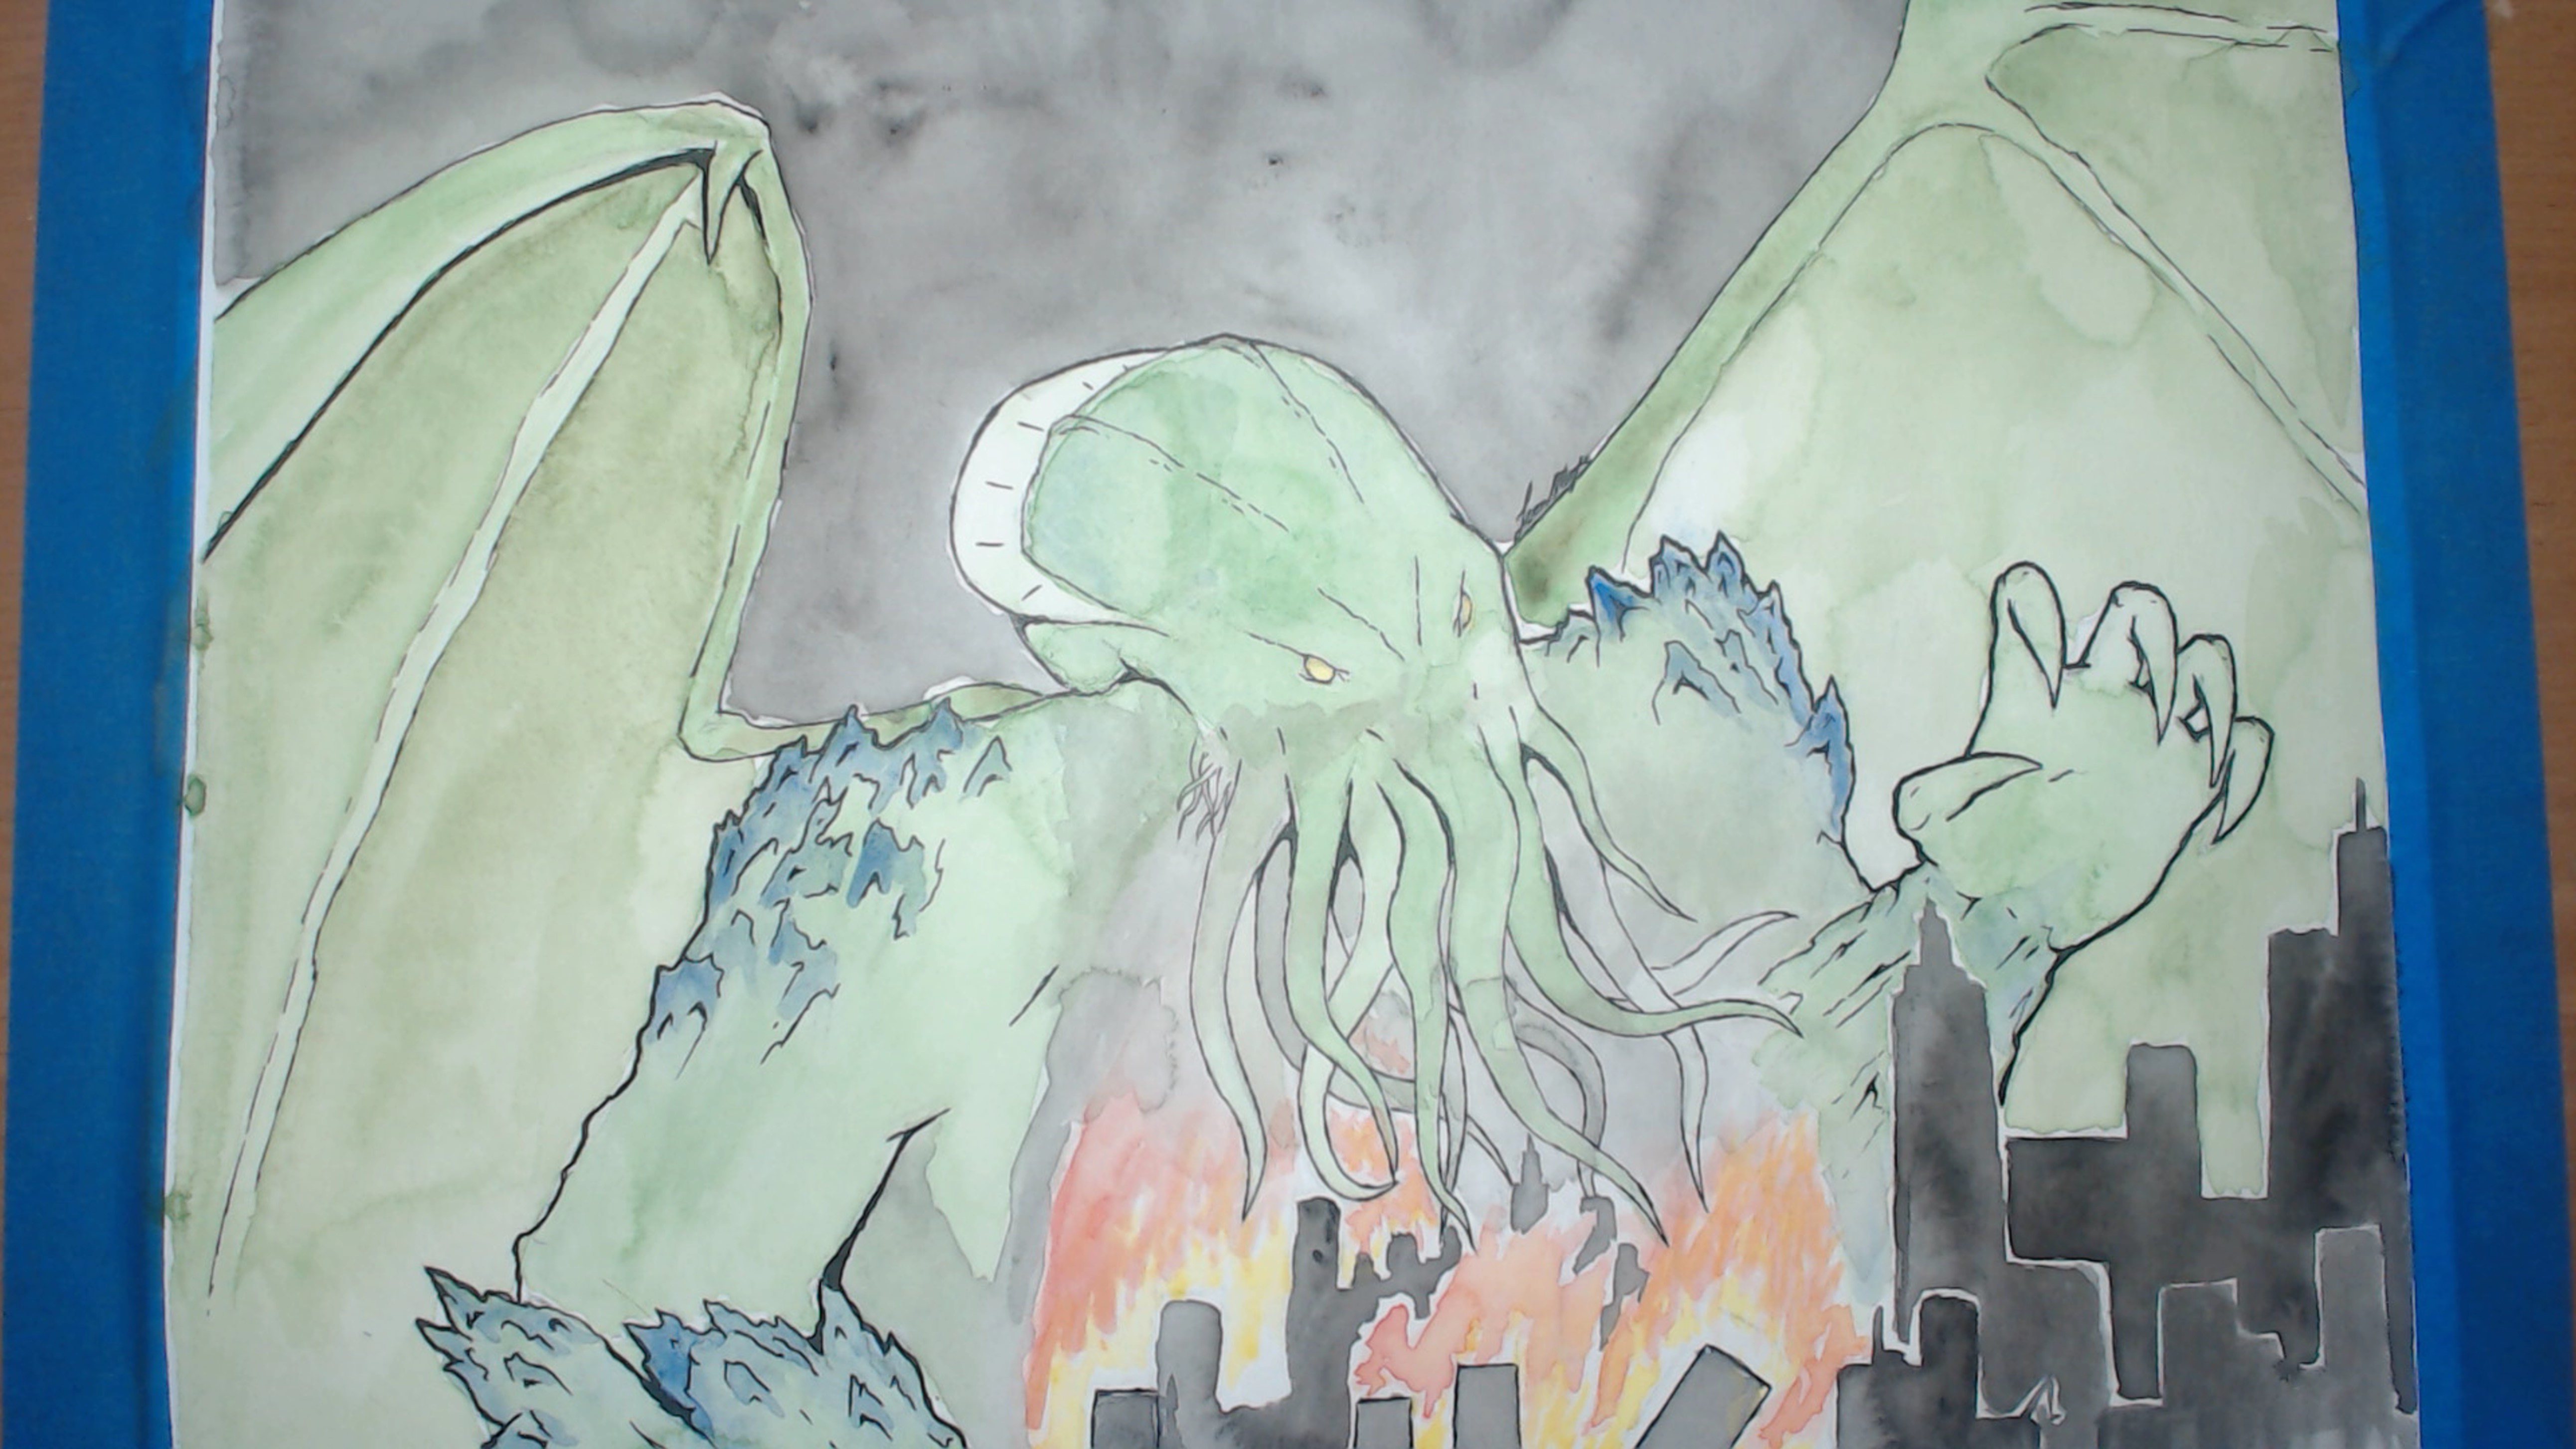 Cthulu Watercolor paining - Cthulu attacking a city